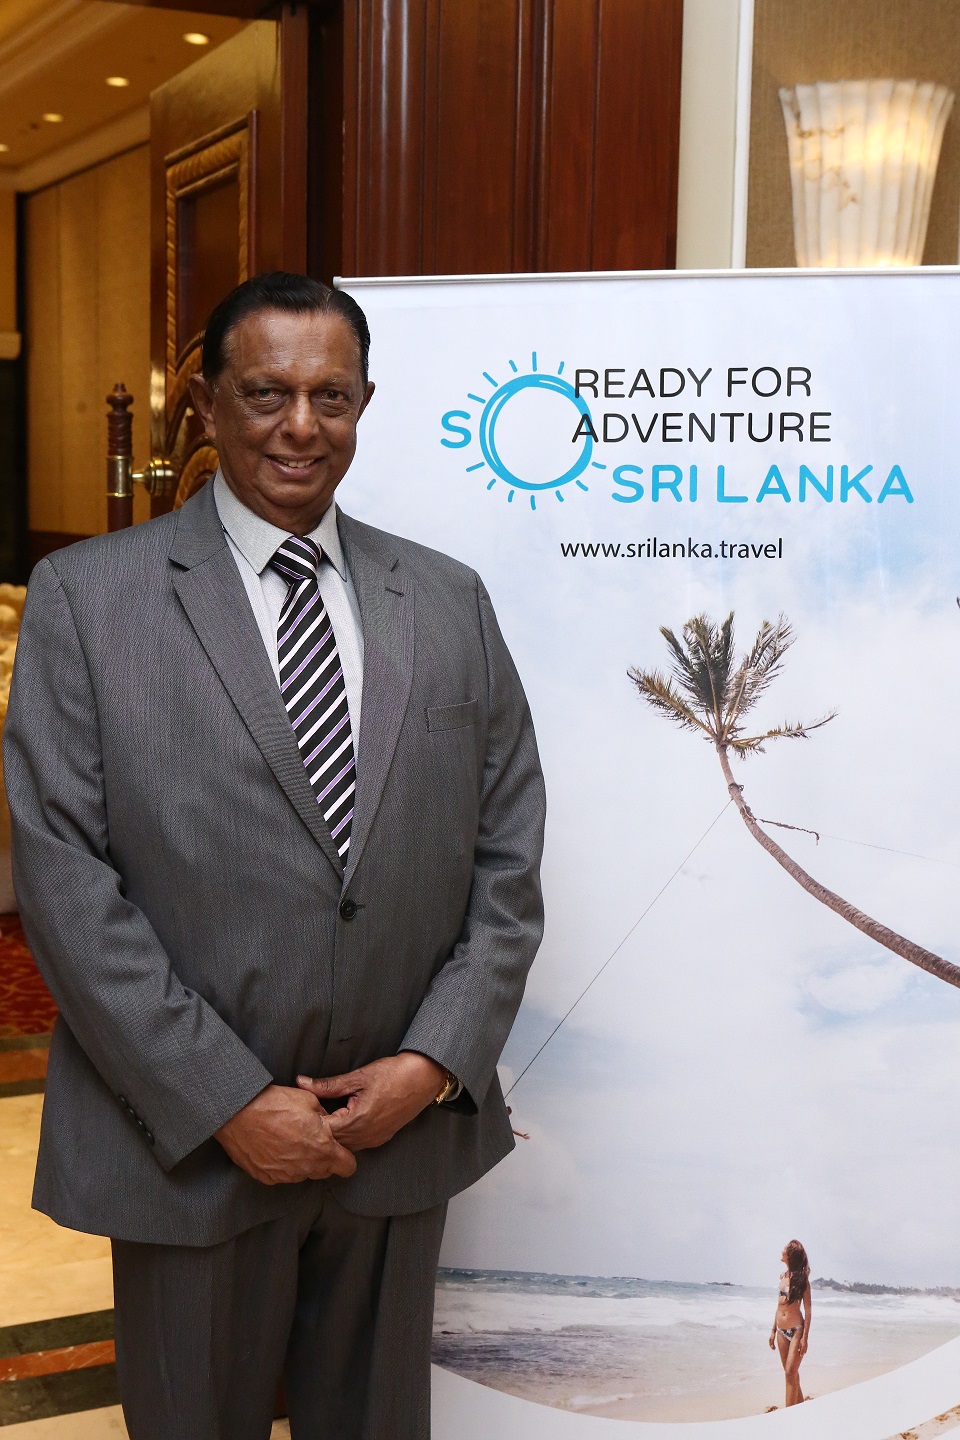 Hon. John Amaratunga, Tourism Minister, Wildlife and Christian Religious Affairs of Sri Lanka